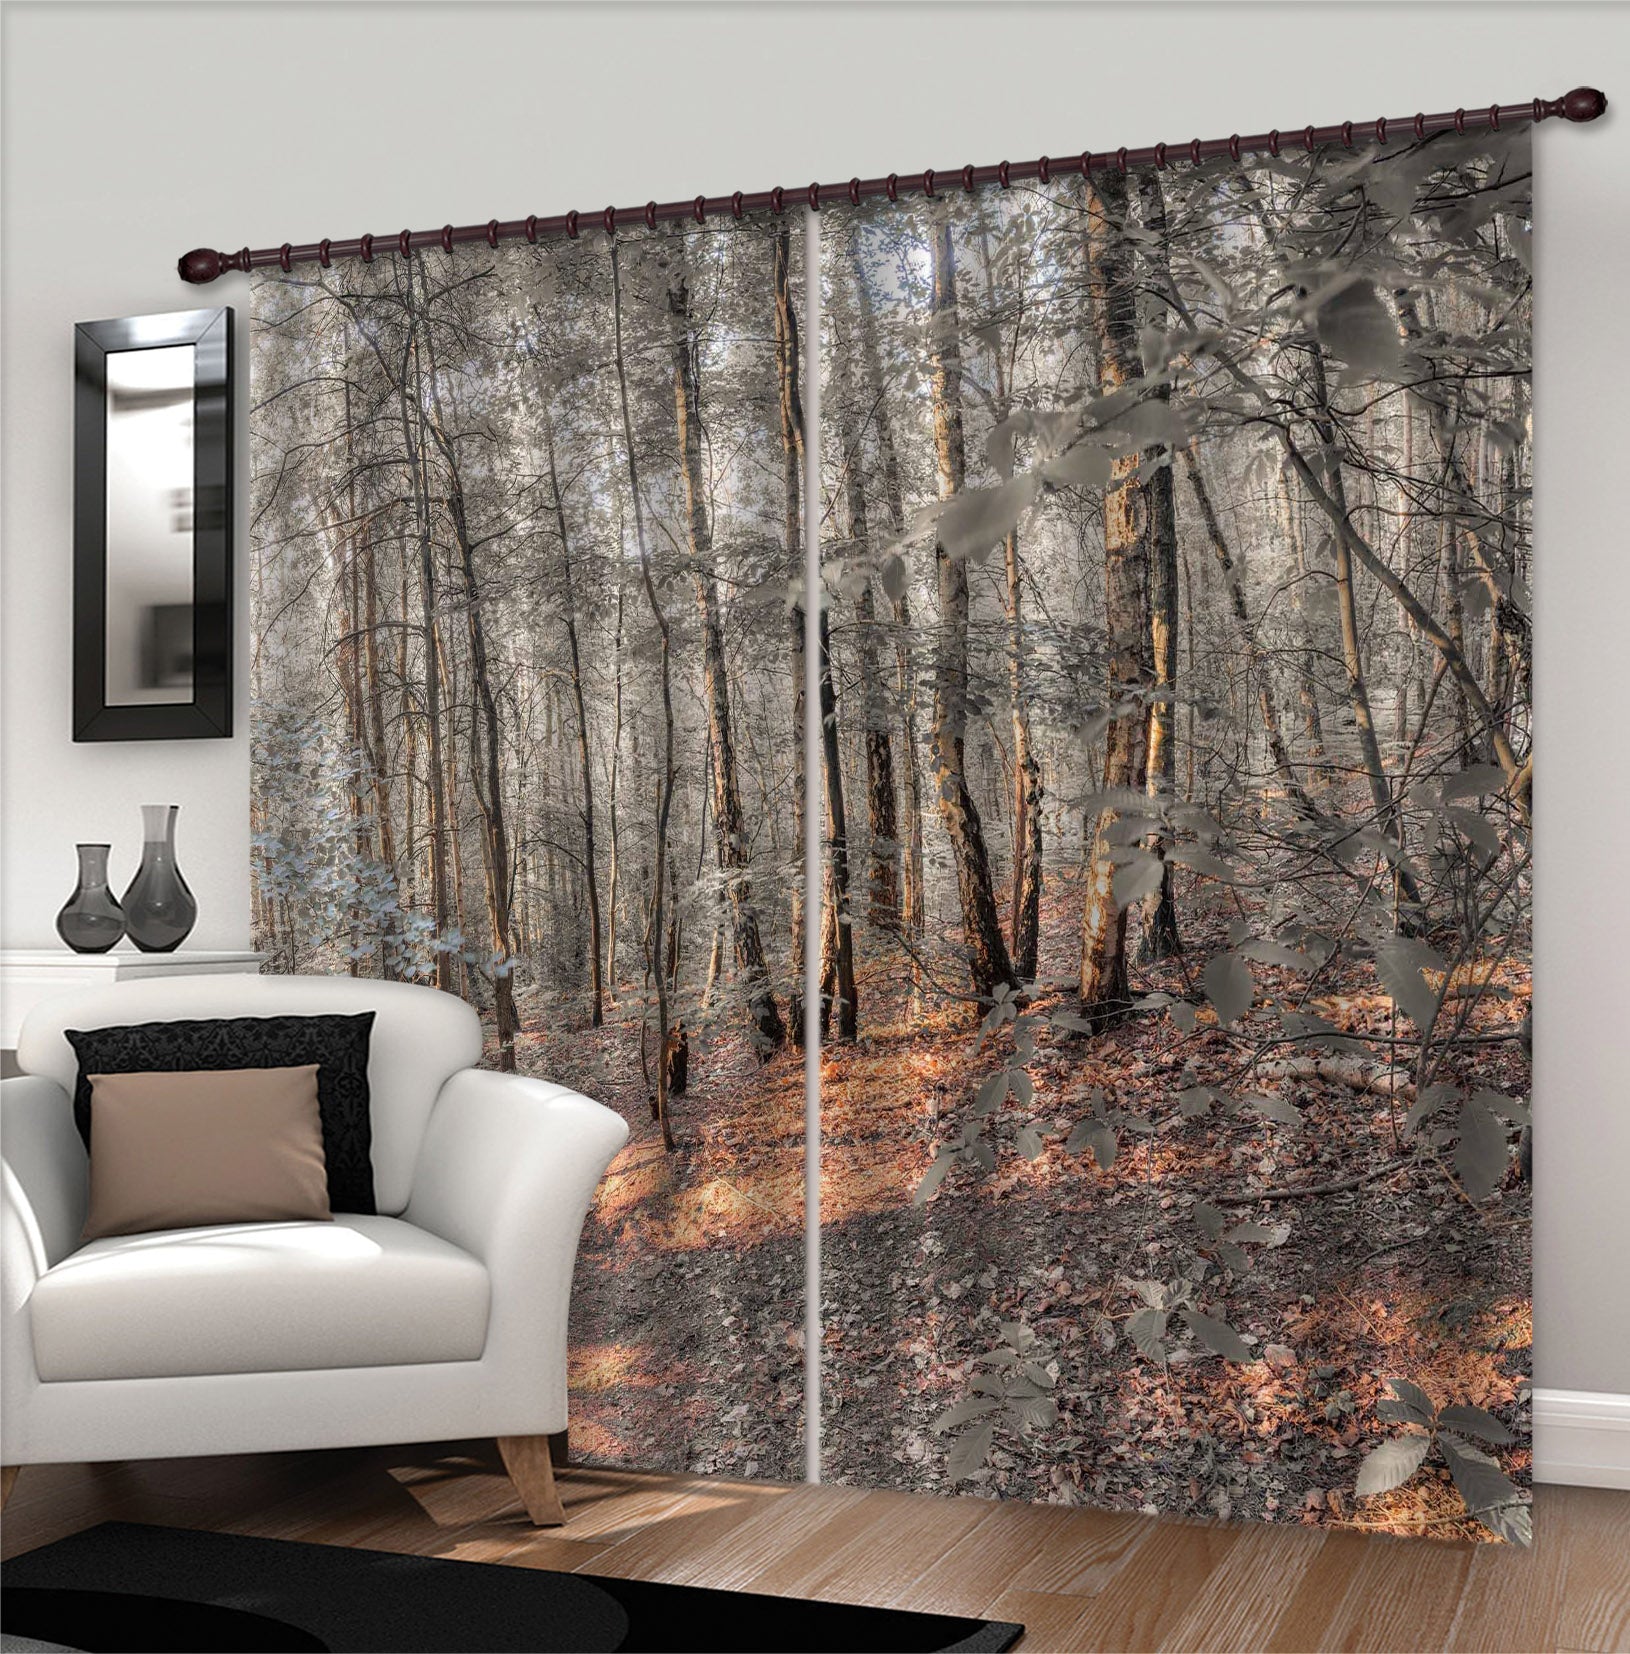 3D Forest Trees 6349 Assaf Frank Curtain Curtains Drapes